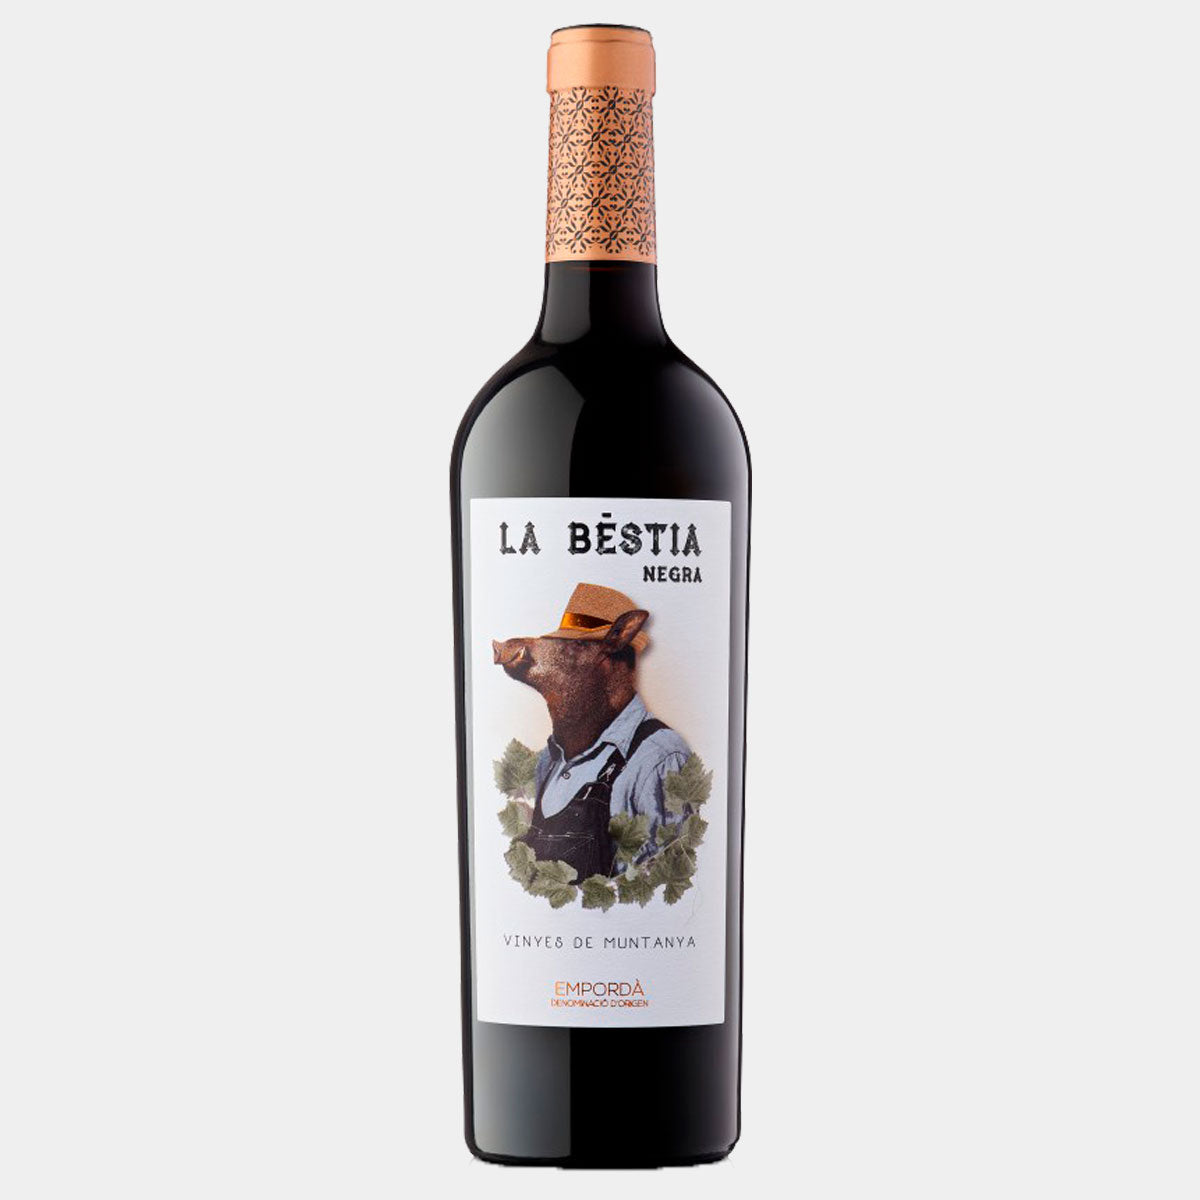 La Bestia Negra - Wines and Copas Barcelona